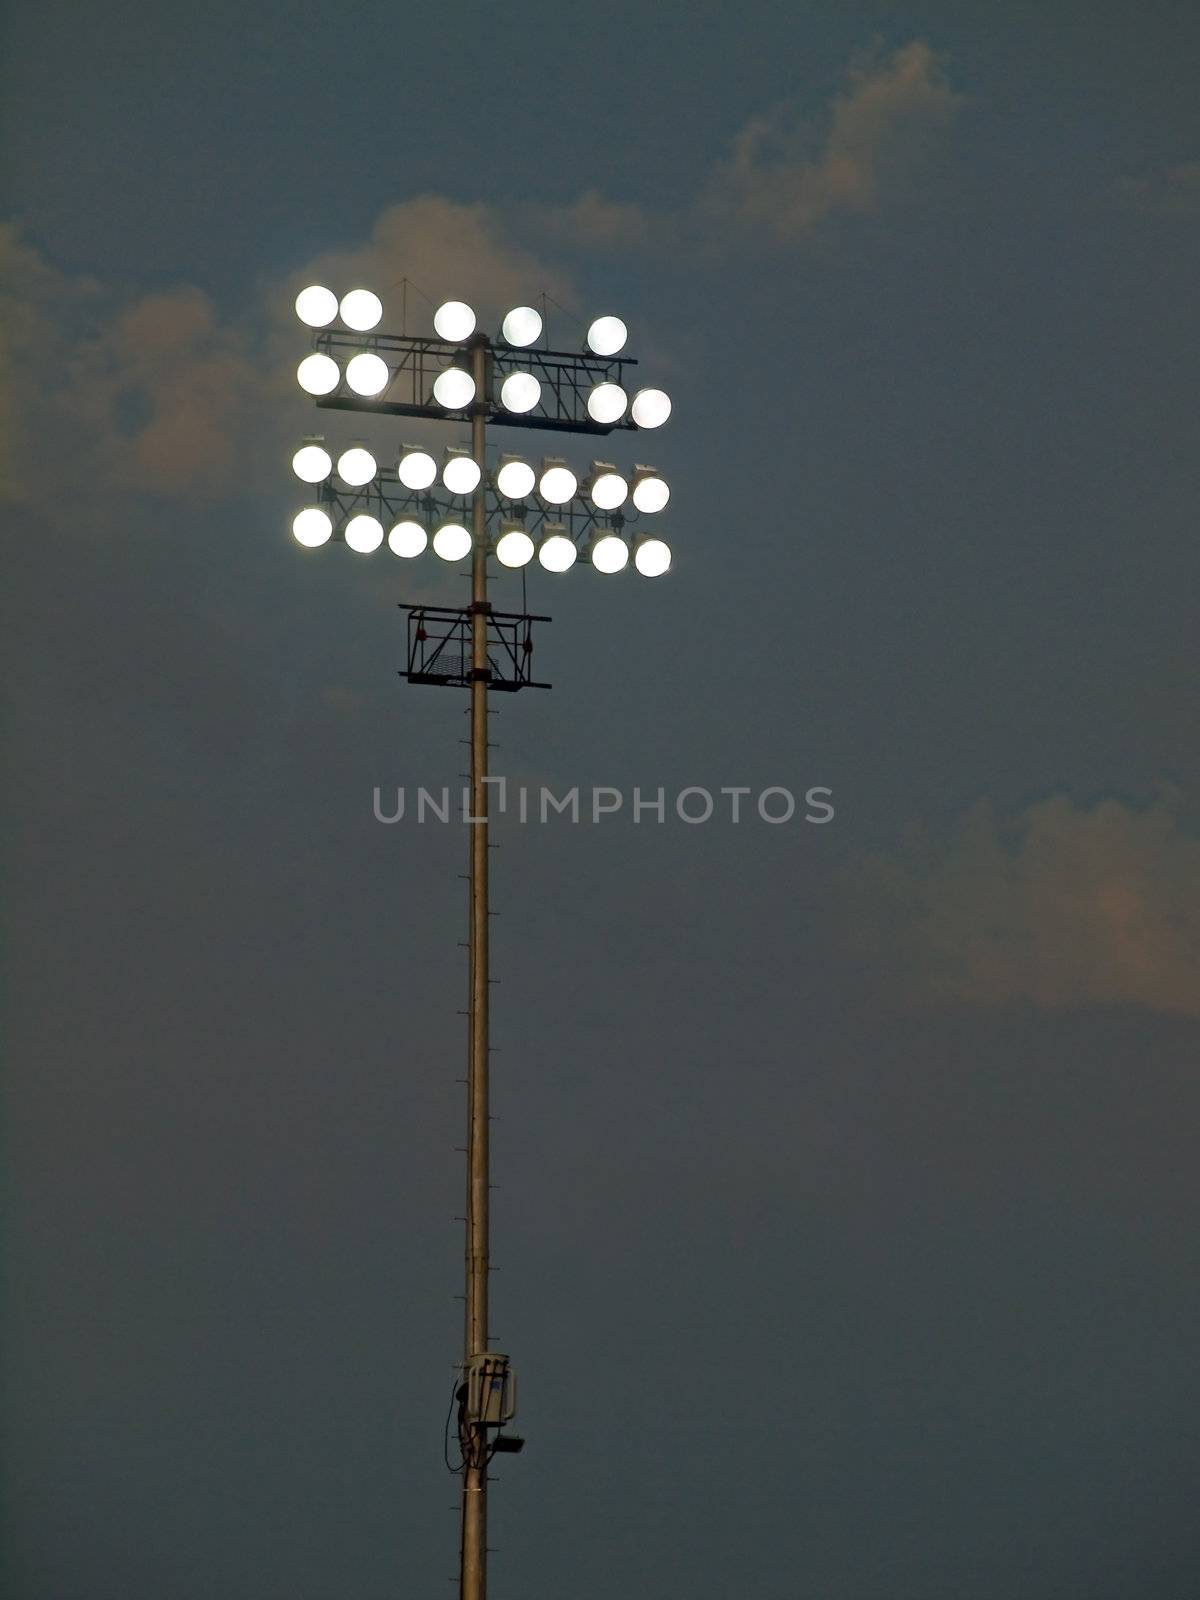 Stadium Lights Against an Evening Sky at Dusk by Frankljunior